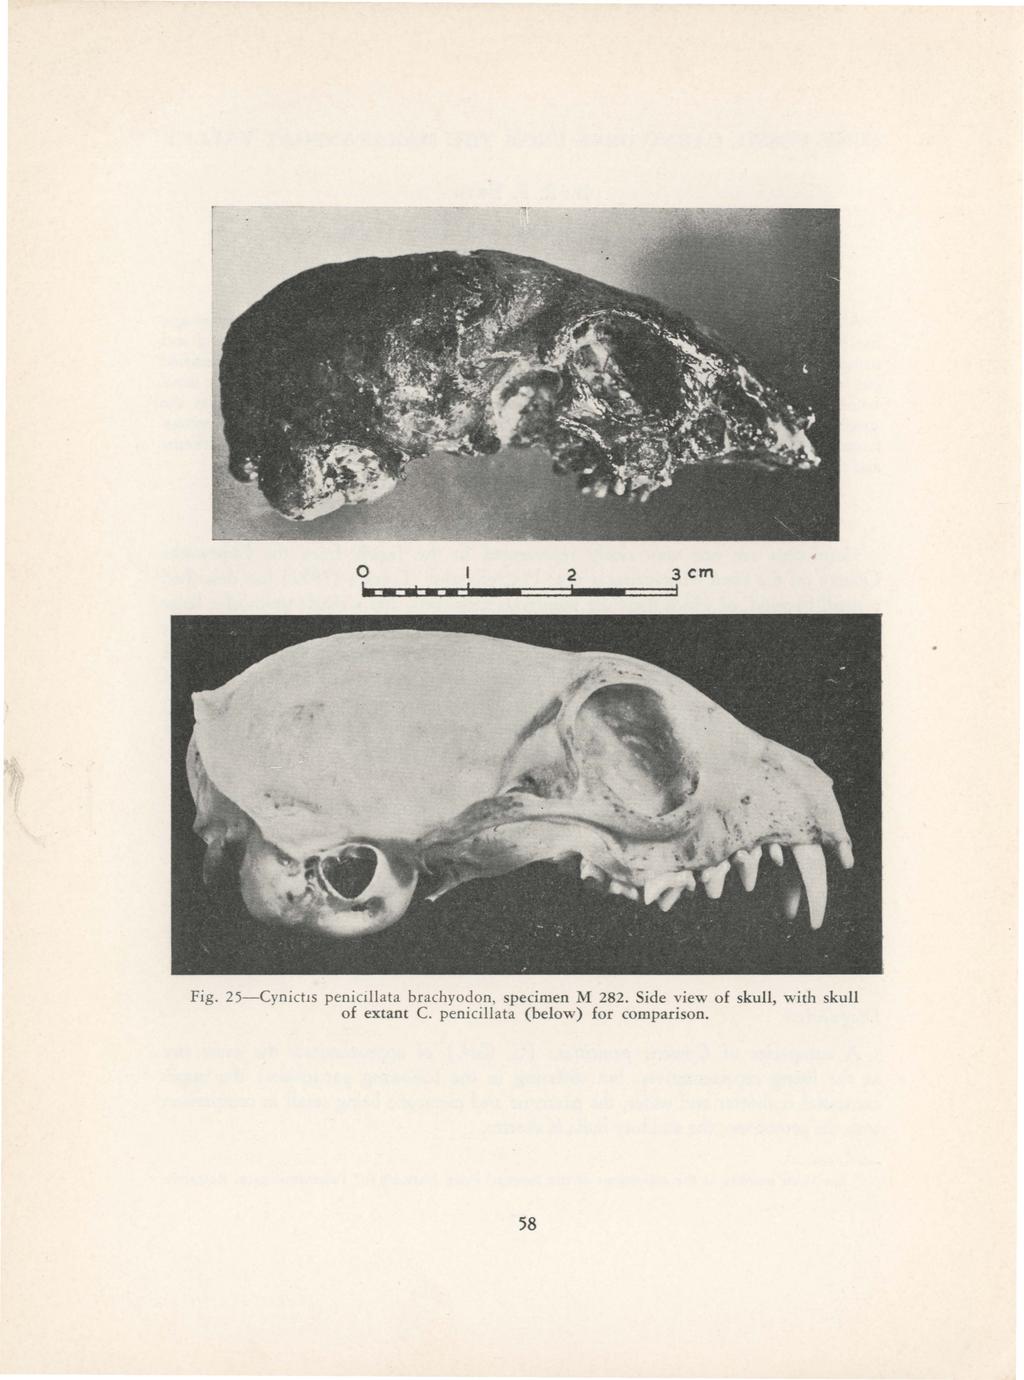 ----- 0 2 3cm Fig. 25-Cynictls penicillata brachyodon specimen M 282.